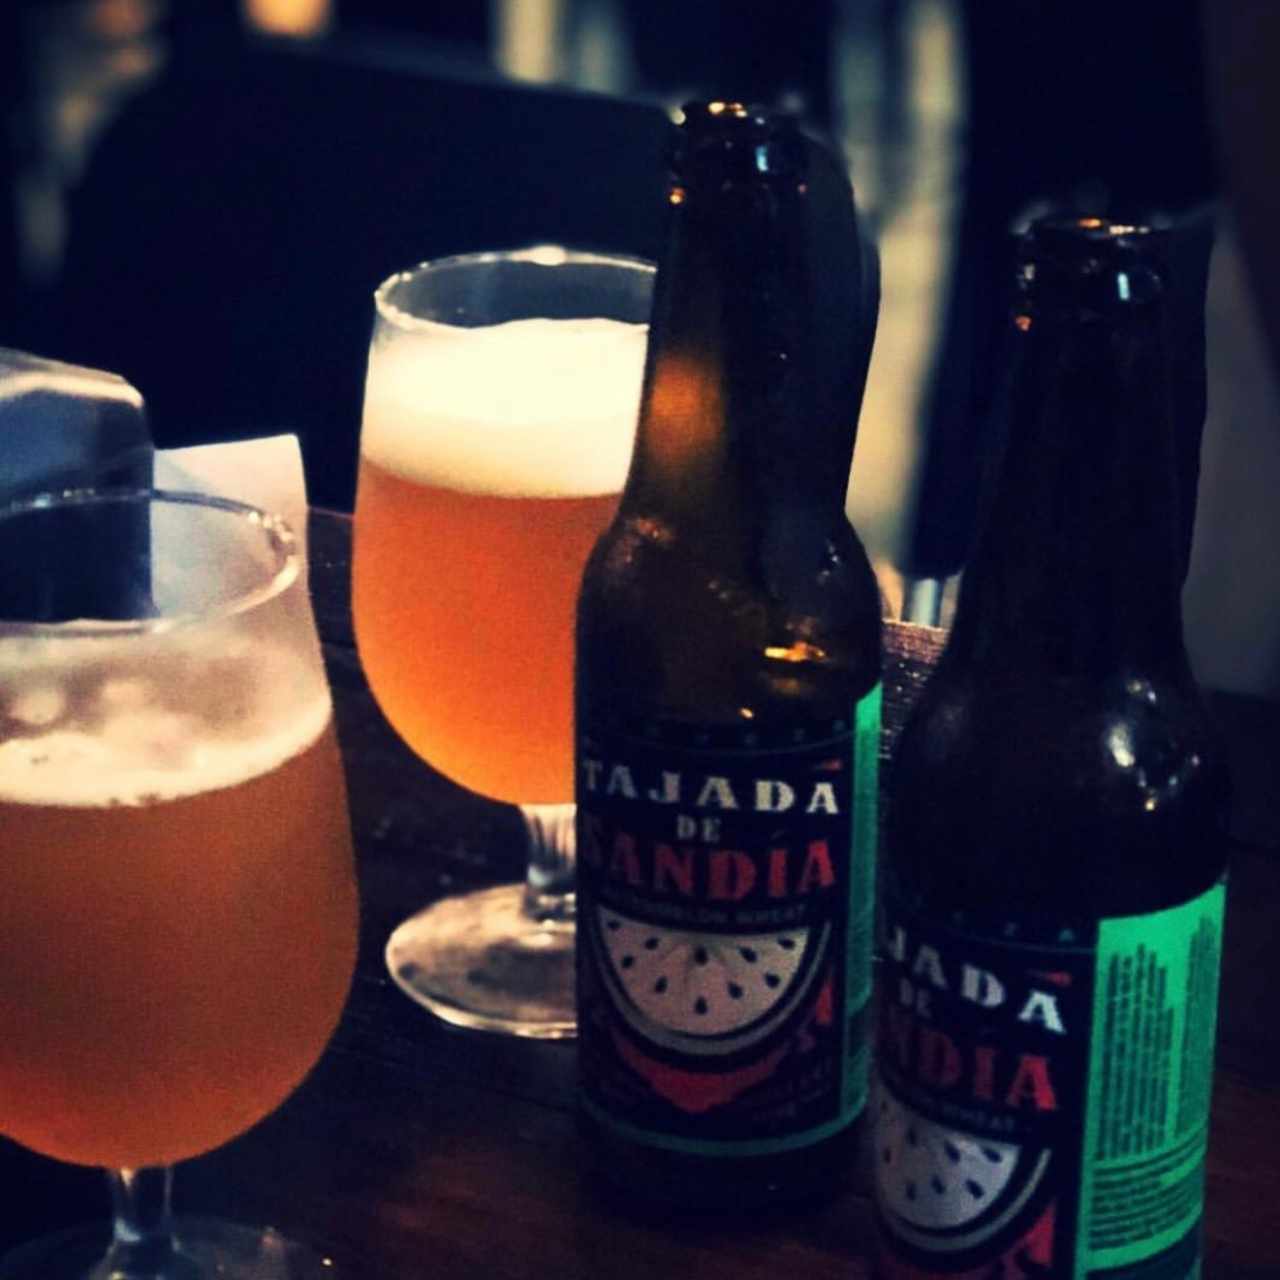 Tajada de Sandia, Cerveza Artesanal. 